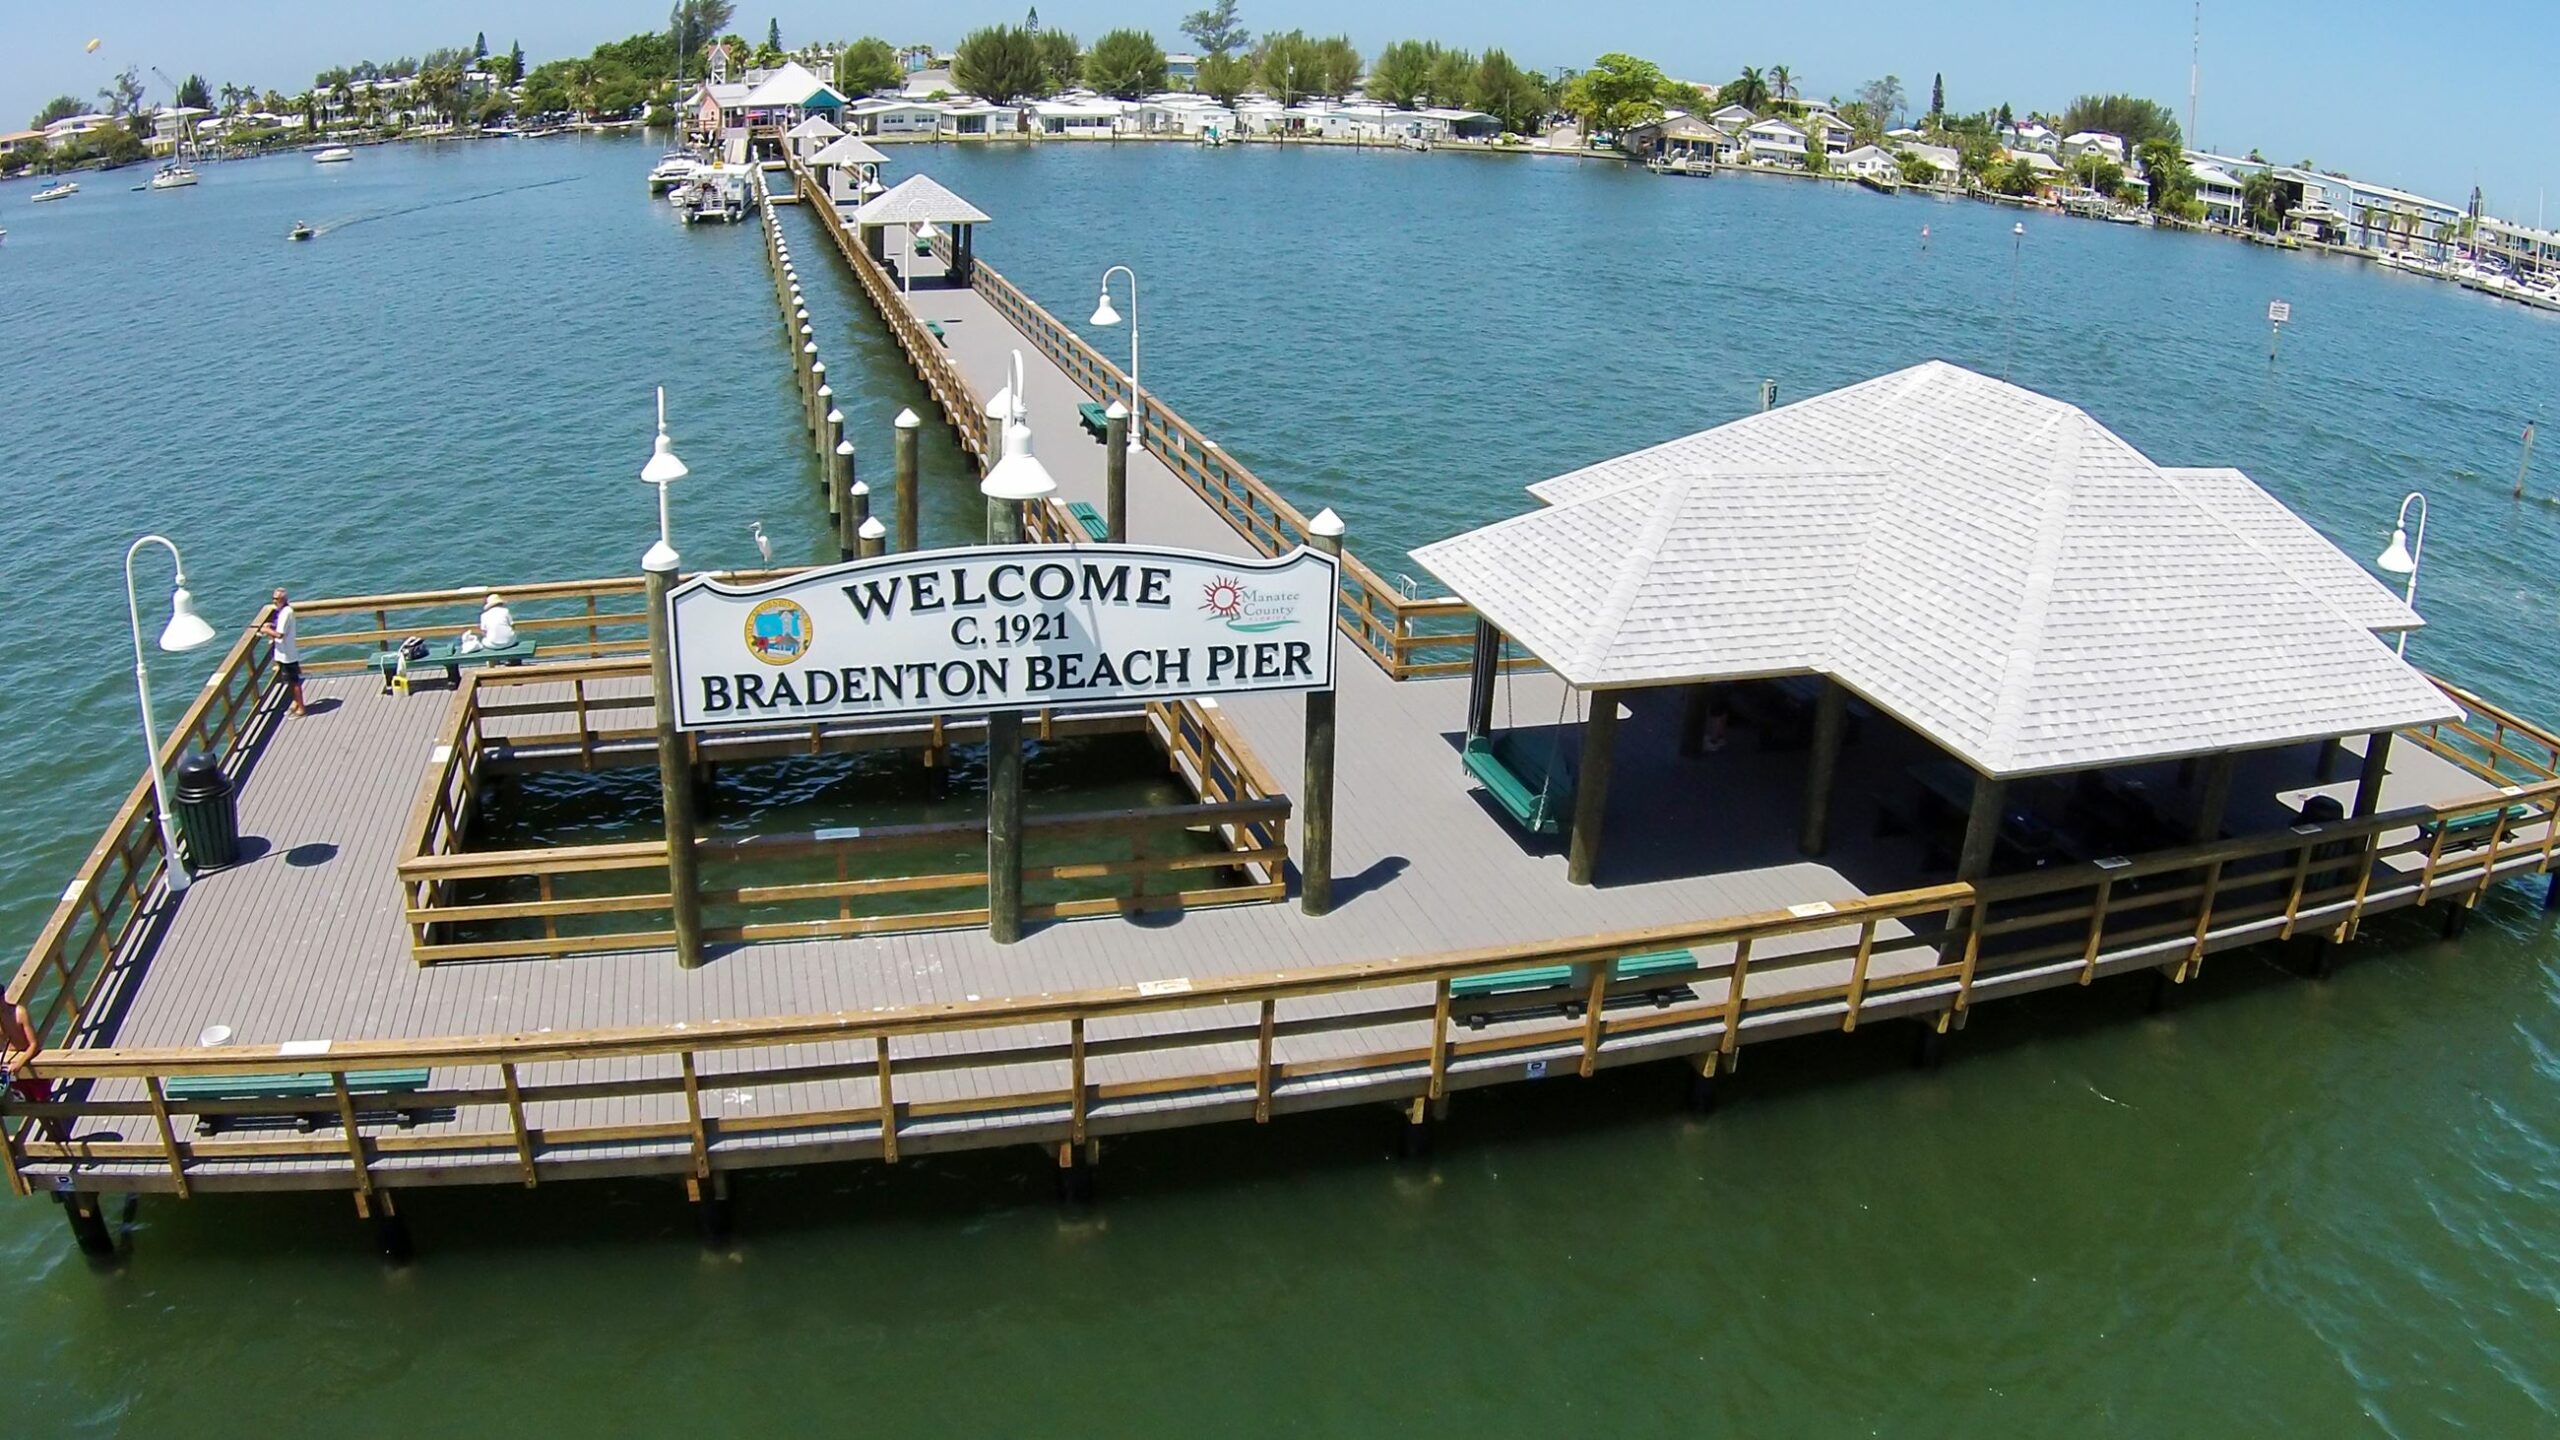 The Bridge Street Pier, Bradenton Beach, Florida